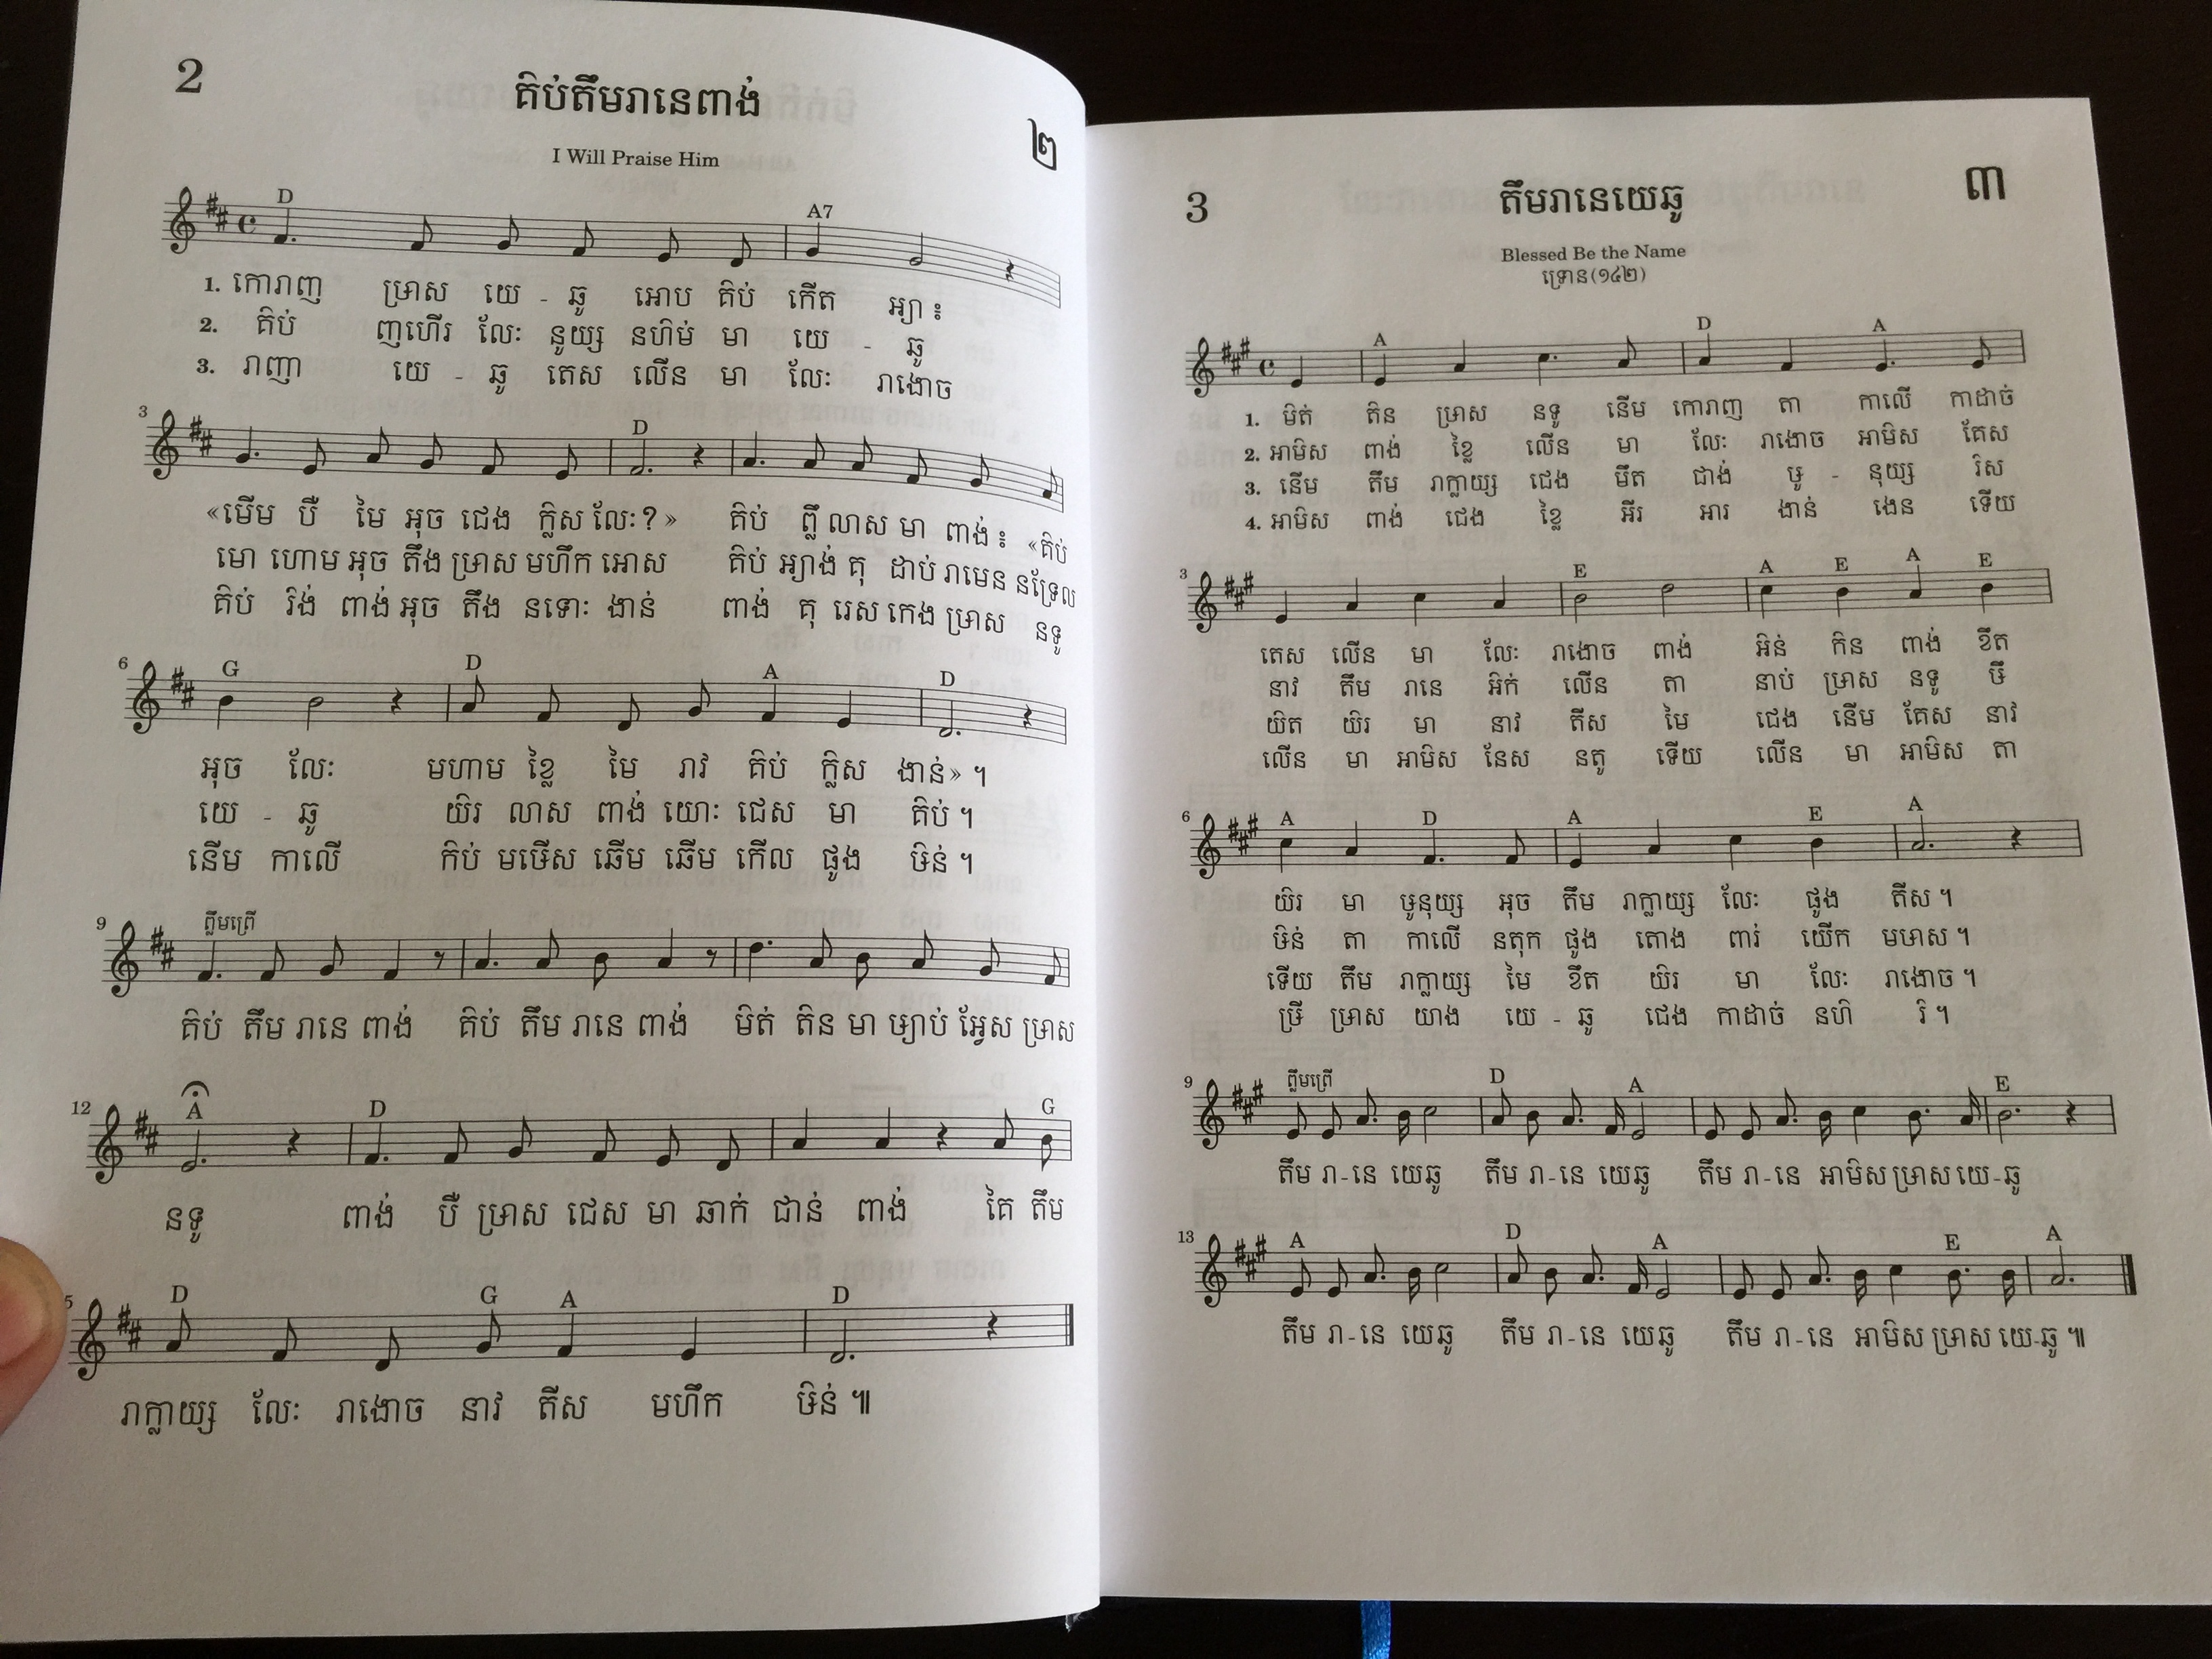 Bunong language Hymn book 1